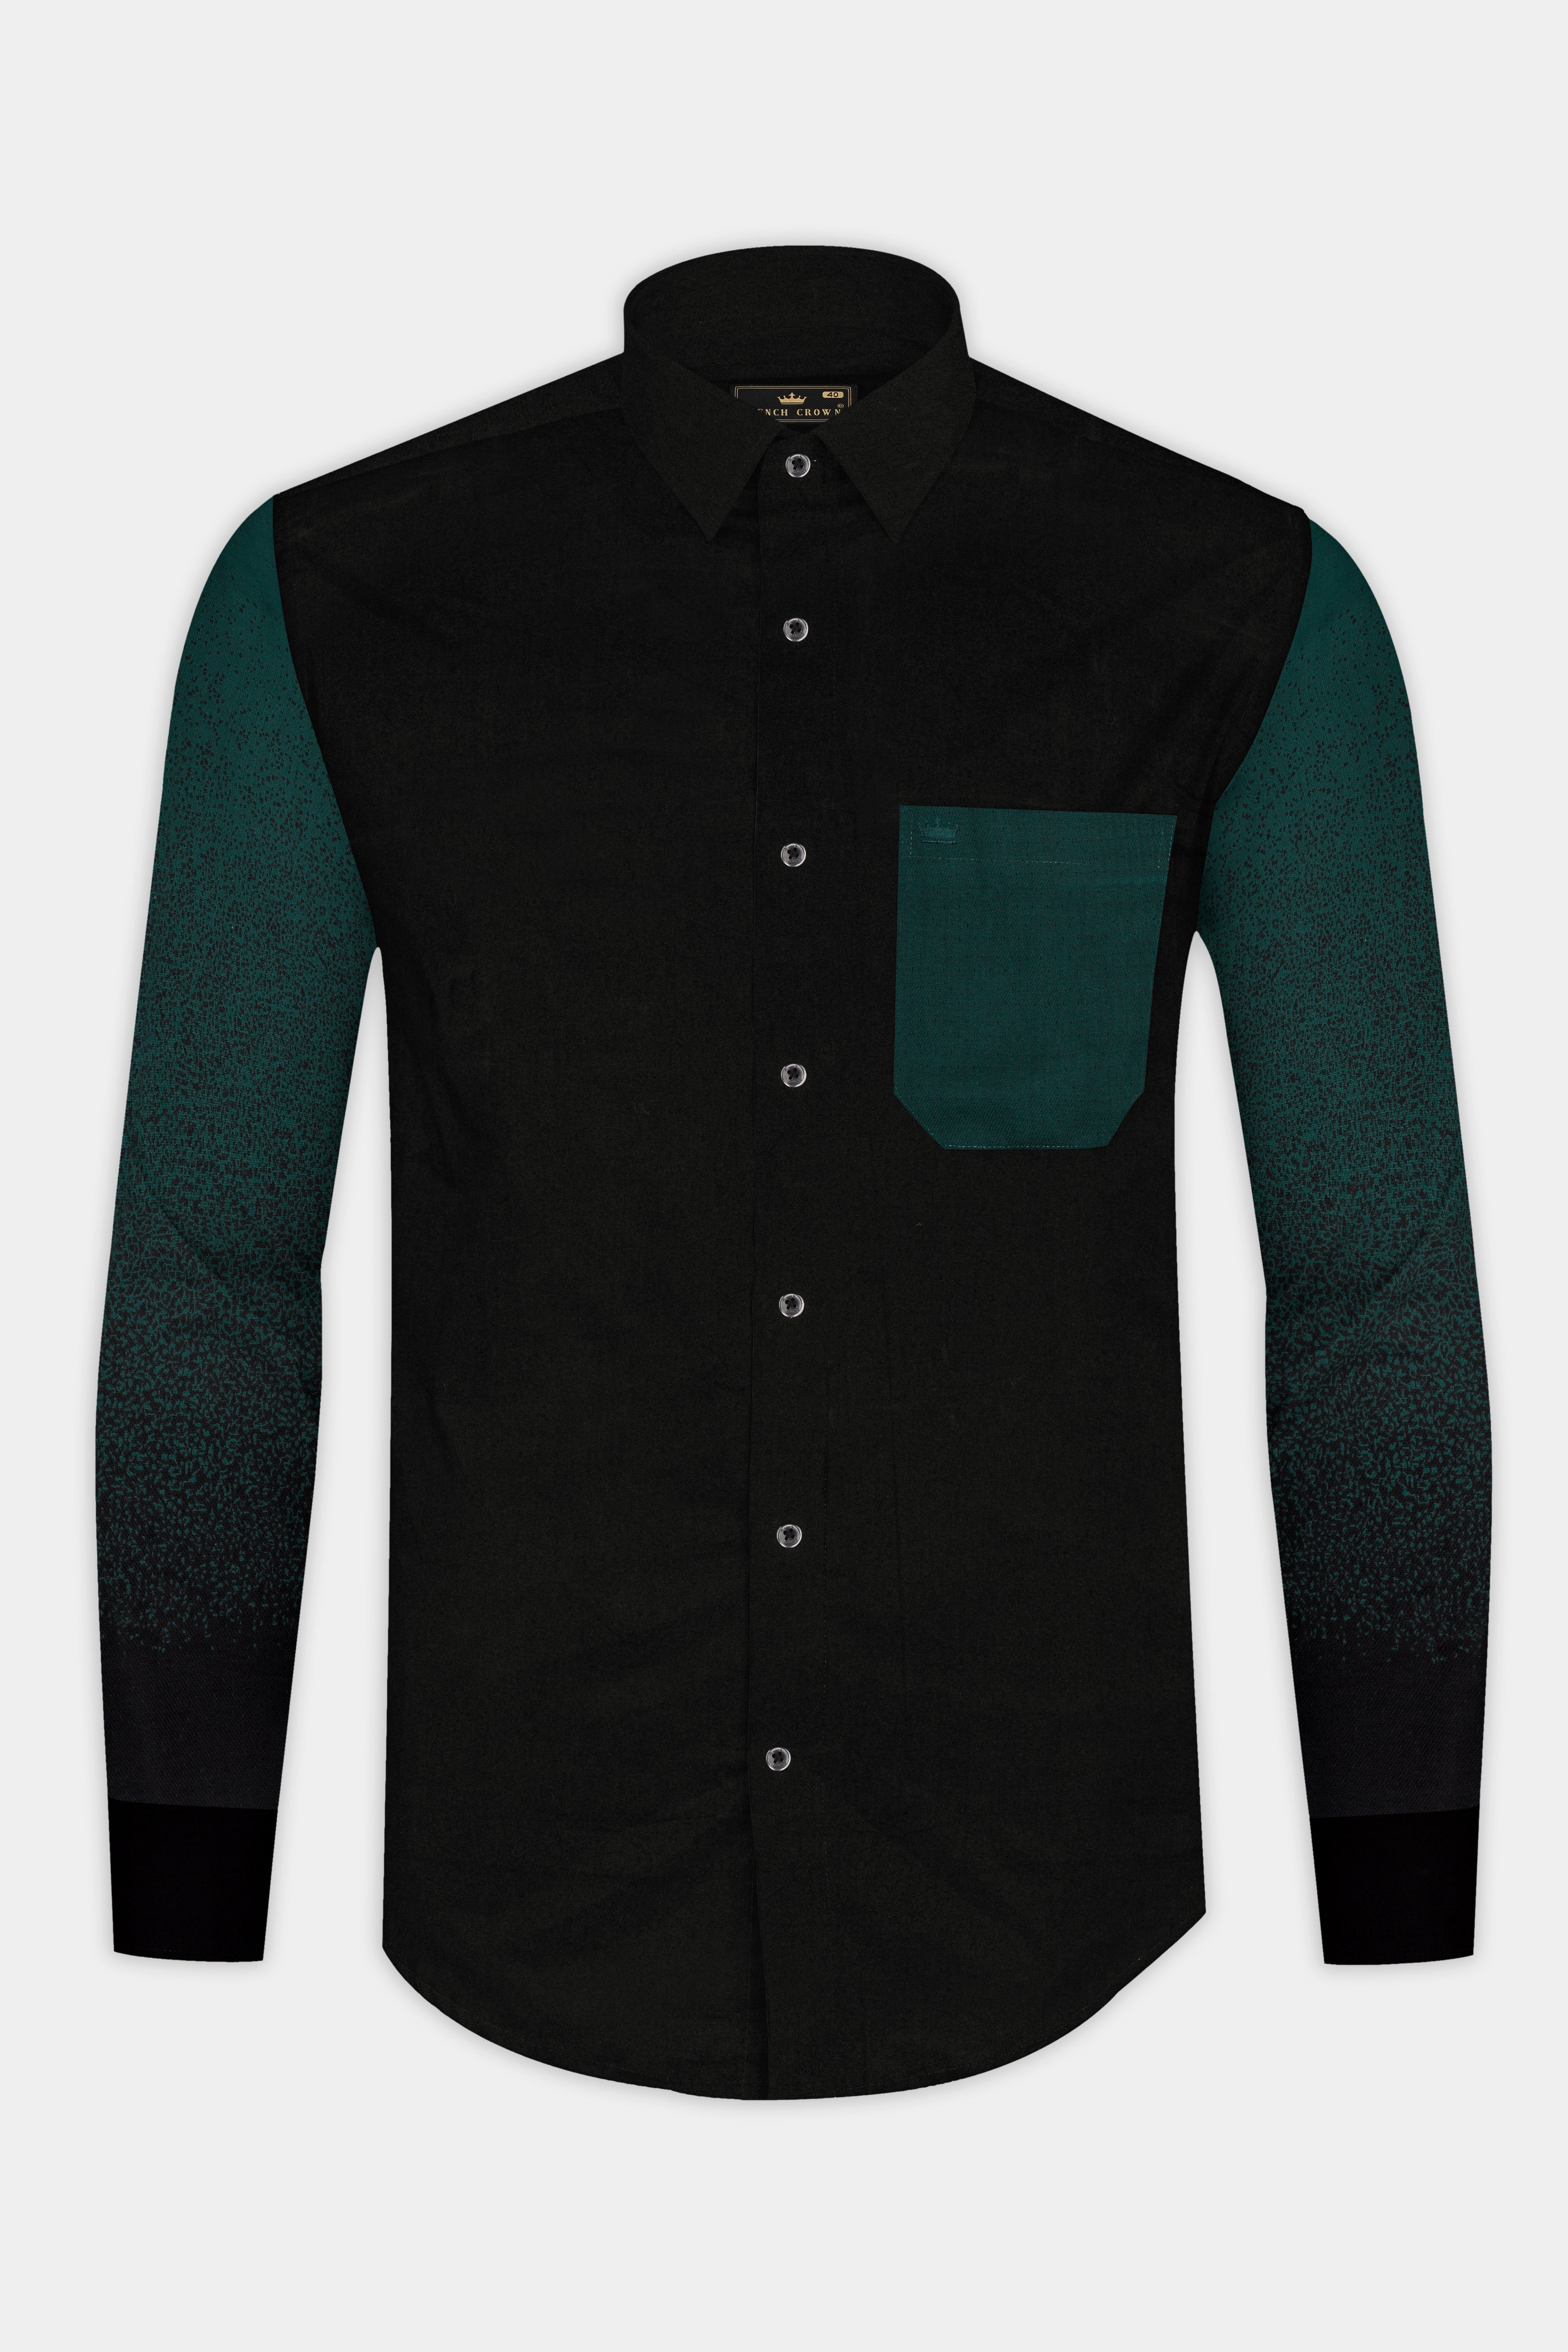 Jade Black with Burnham Green Printed Super Soft Premium Cotton Designer Shirt